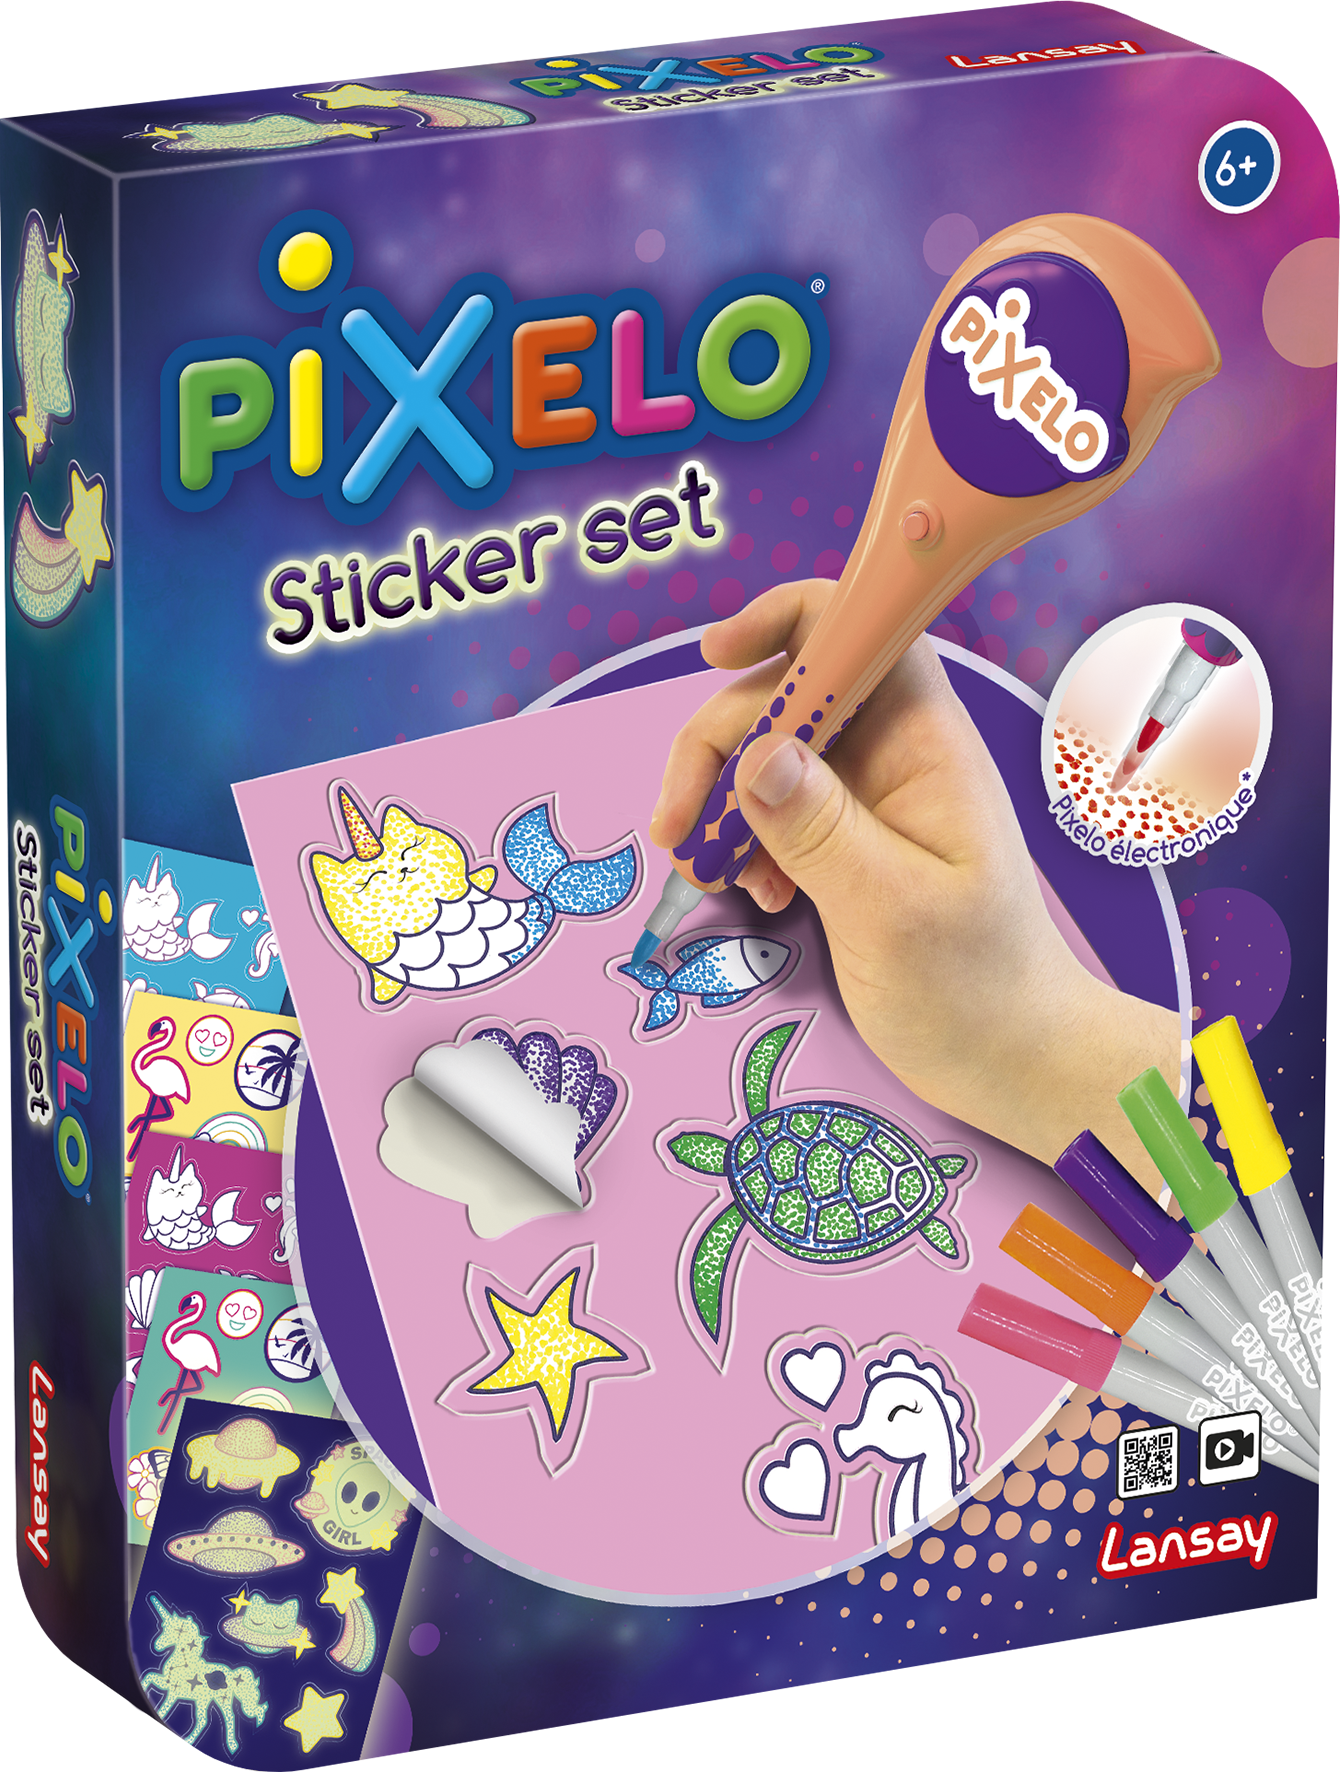 Pixelo - Sticker Set